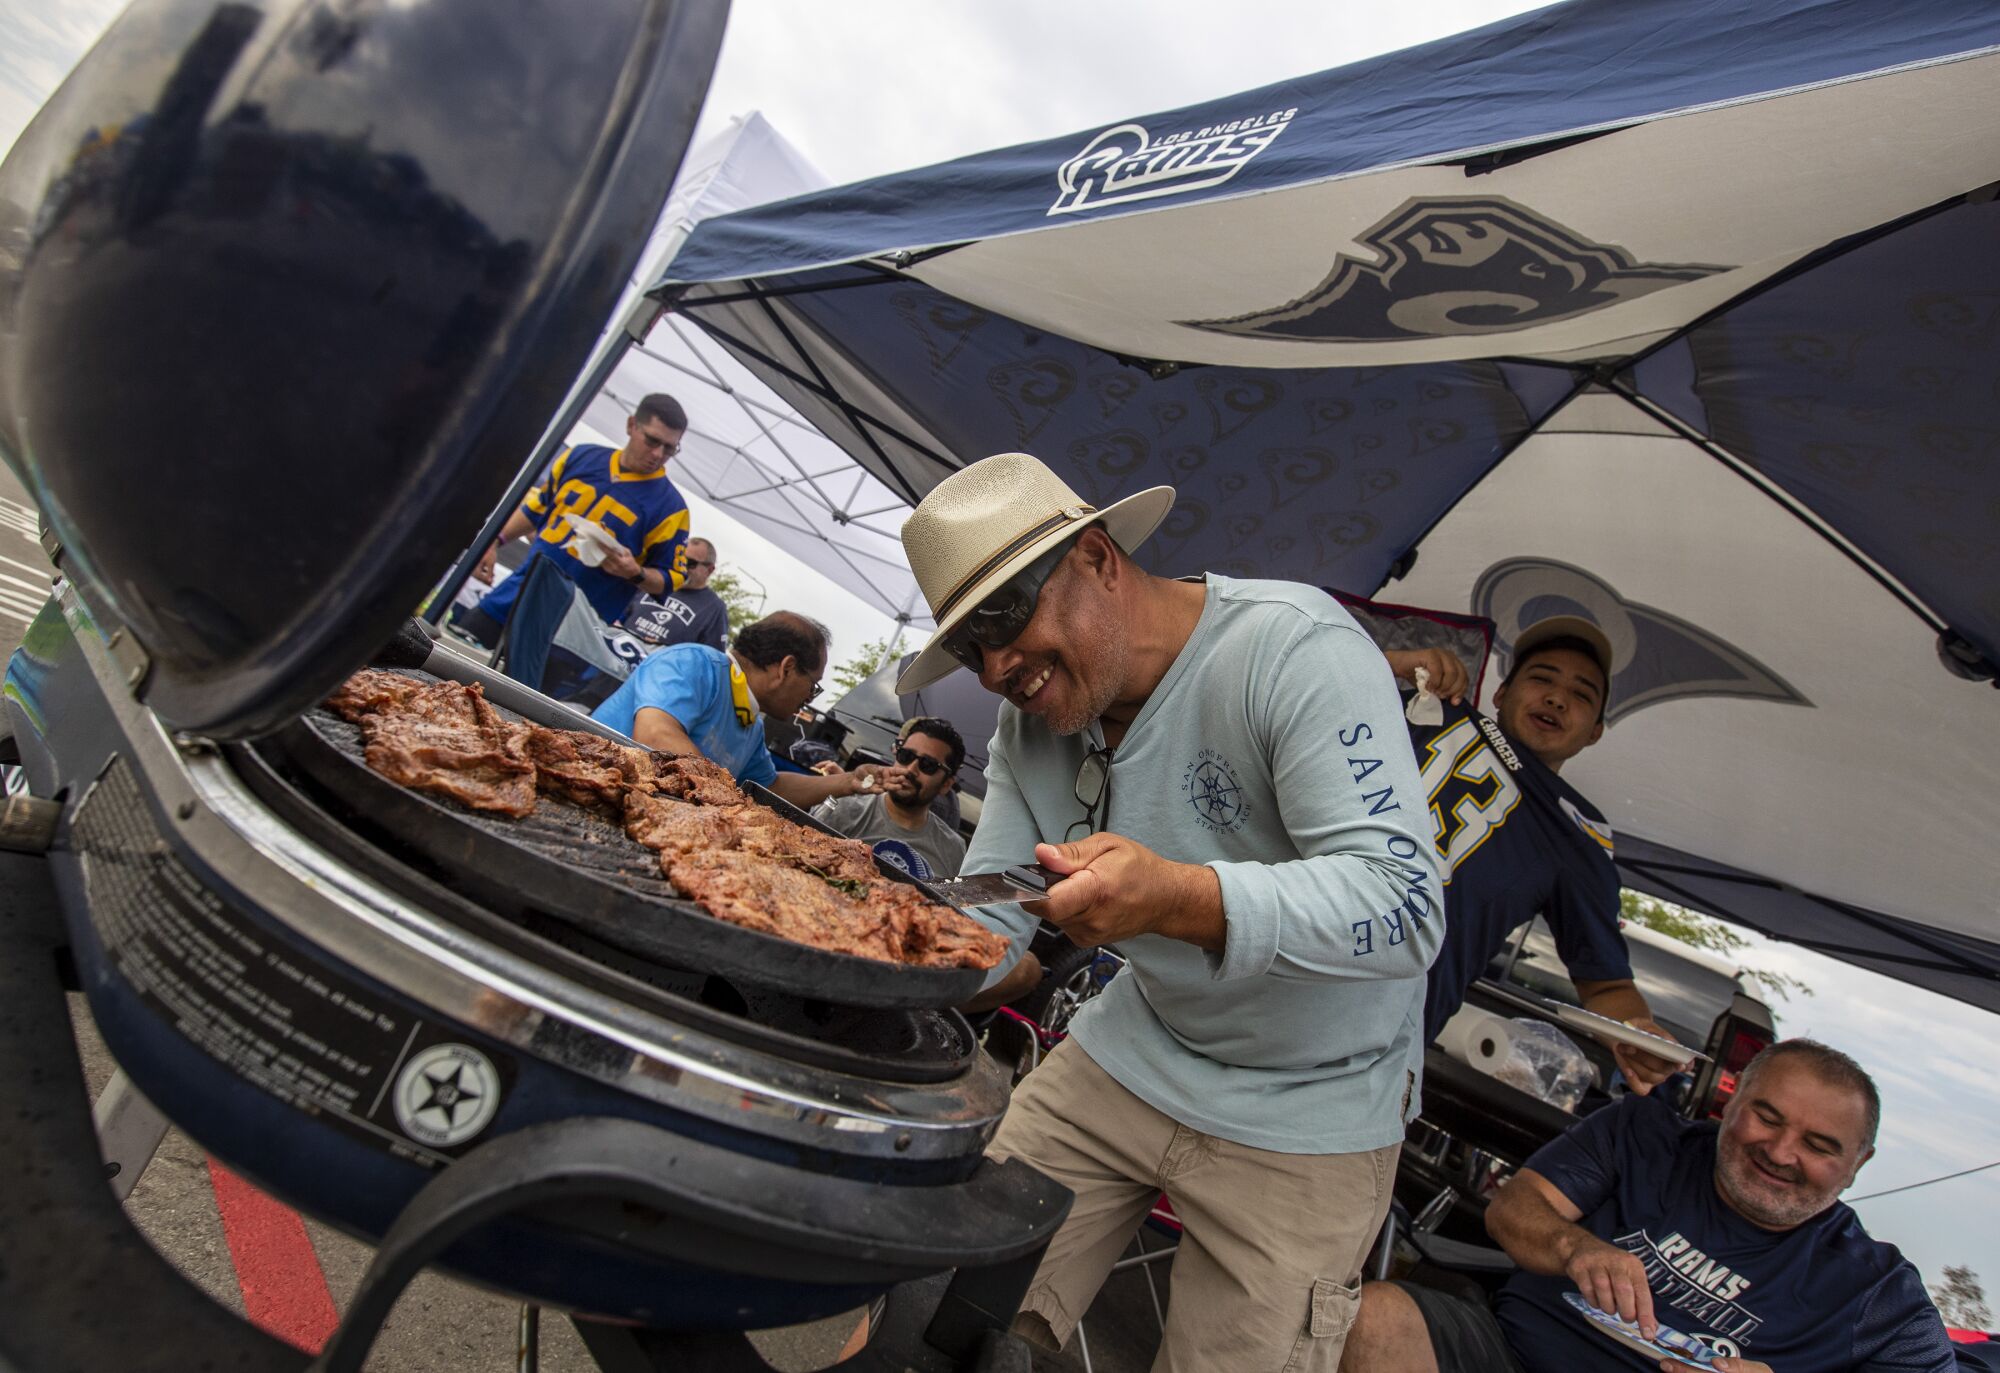 Hector Romero of San Diego grills up carne asada while tailgating Saturday at SoFi Stadium.